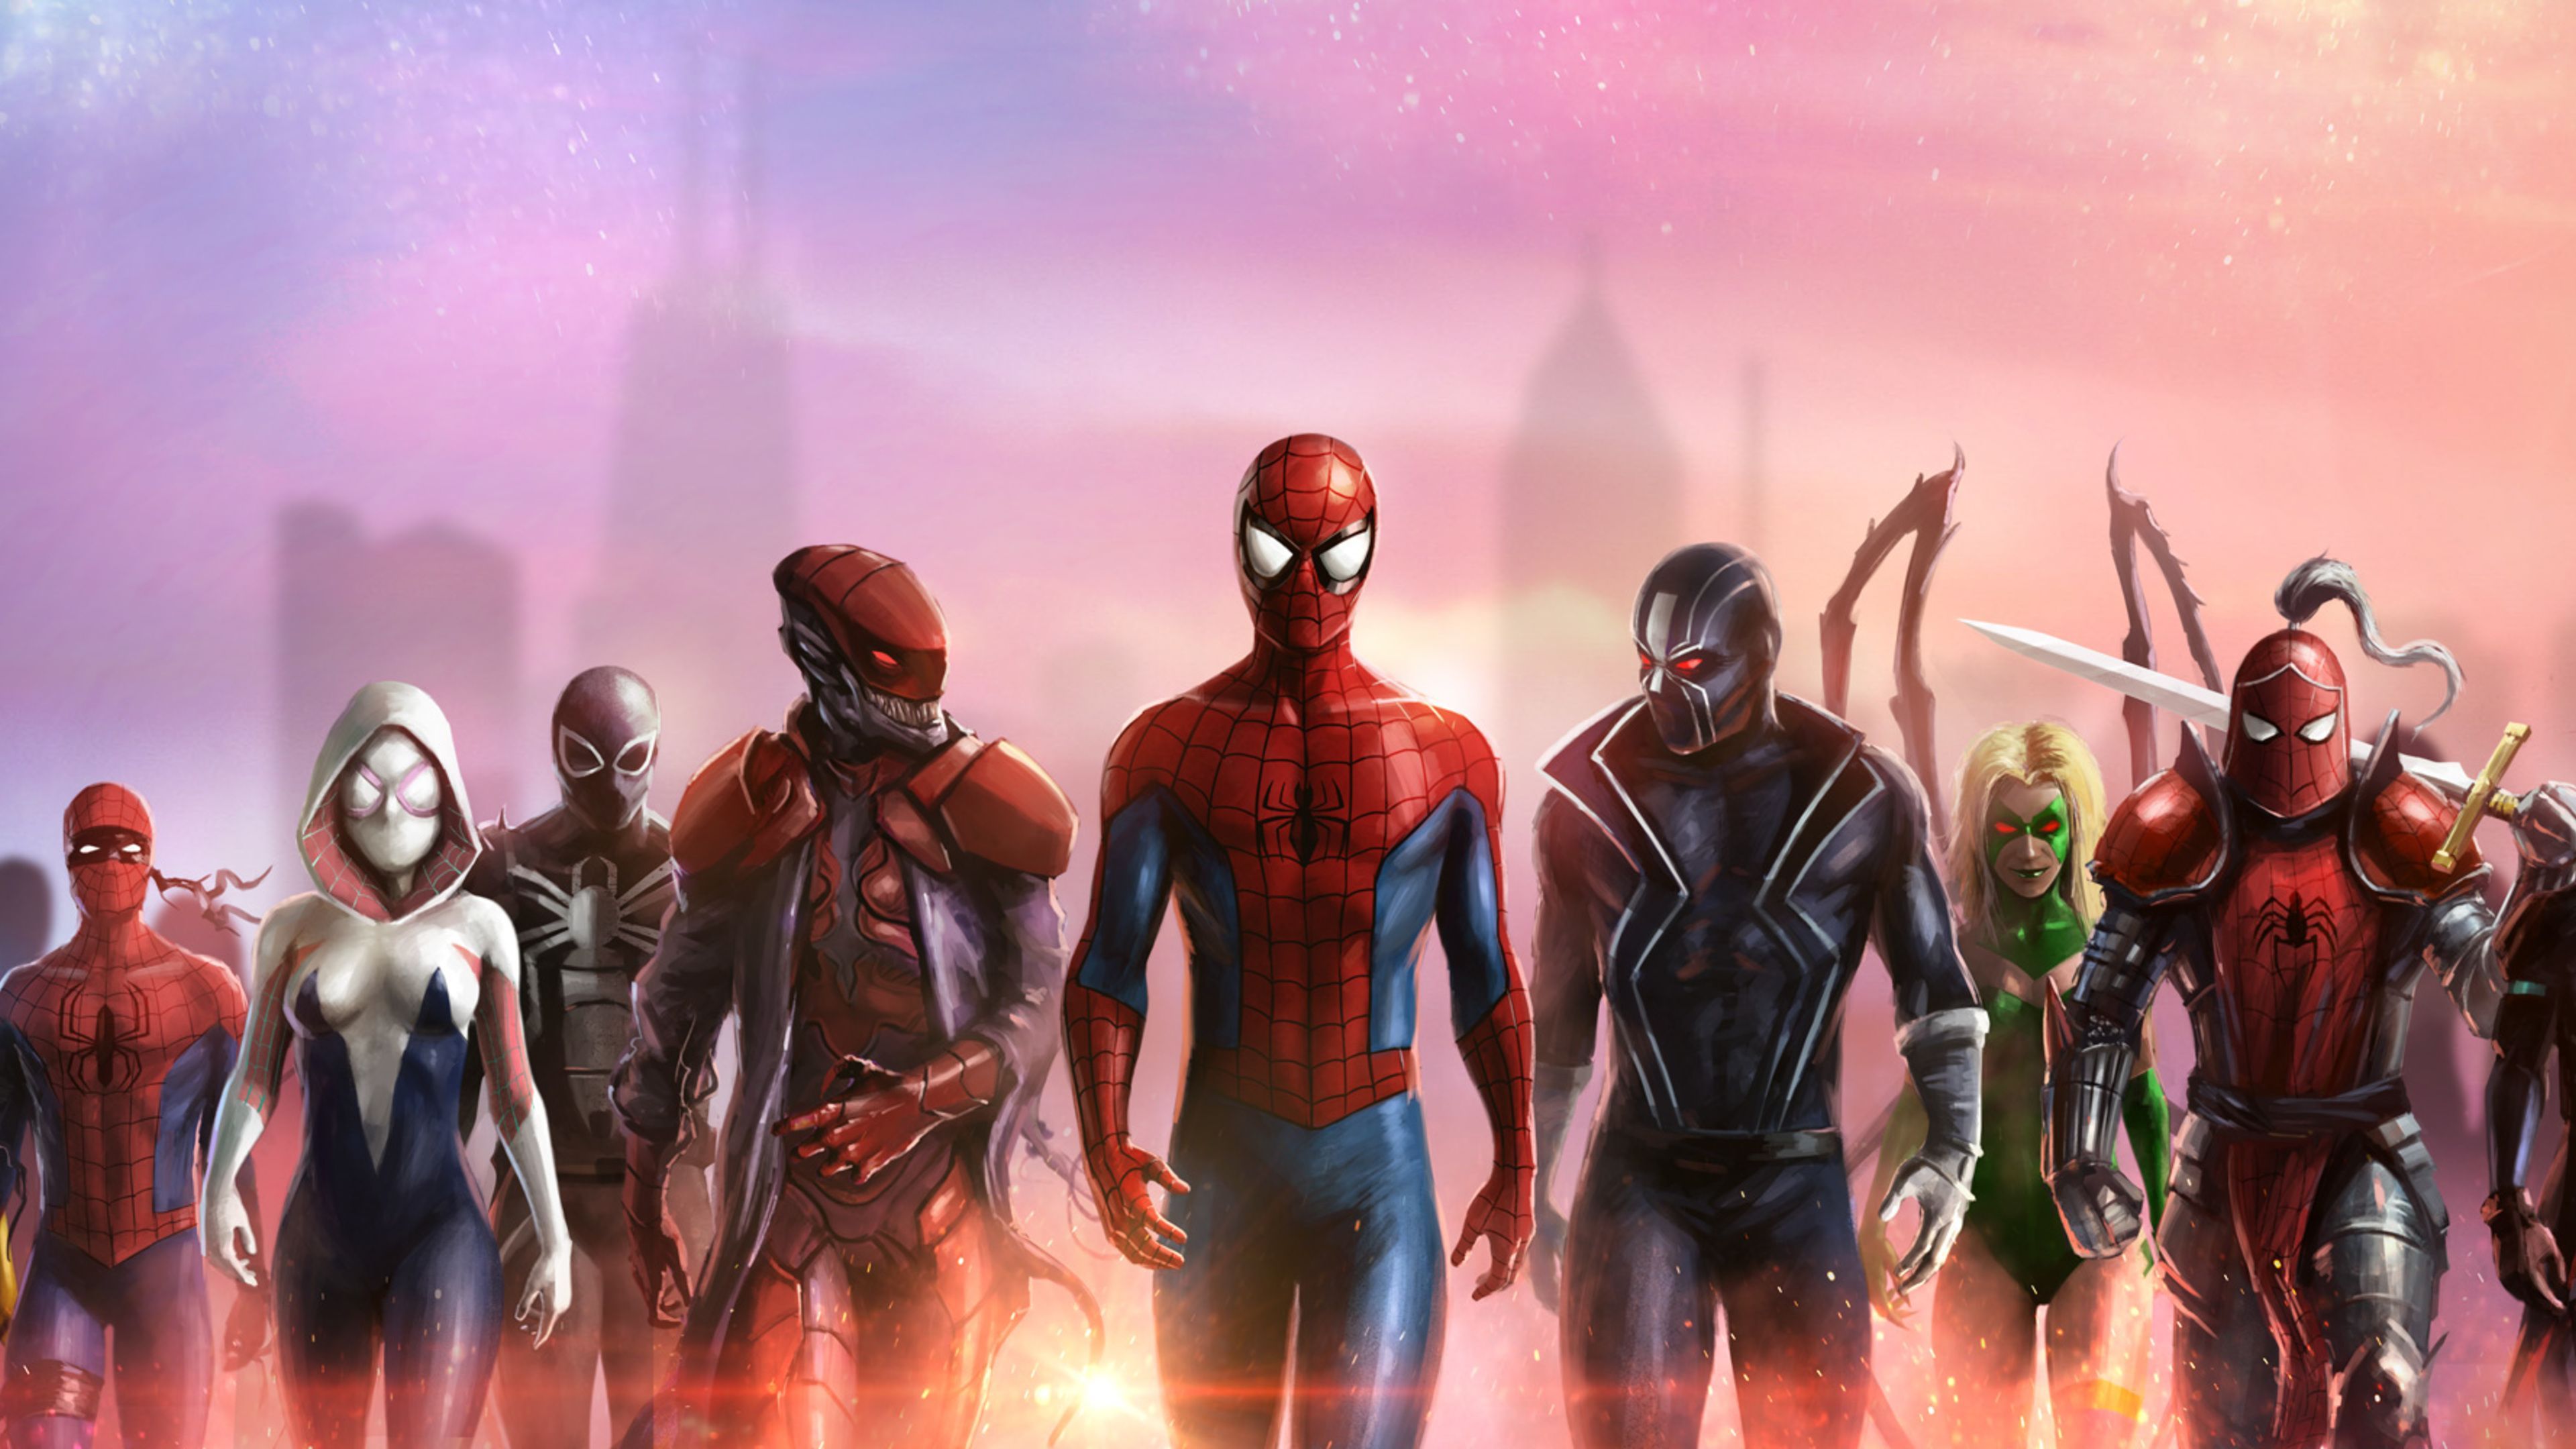 Spiderman And His Team superheroes wallpaper, spiderman wallpaper, hd- wallpaper, digital art wallpaper, artwor. Spiderman, Dc comics vs marvel, Hero wallpaper